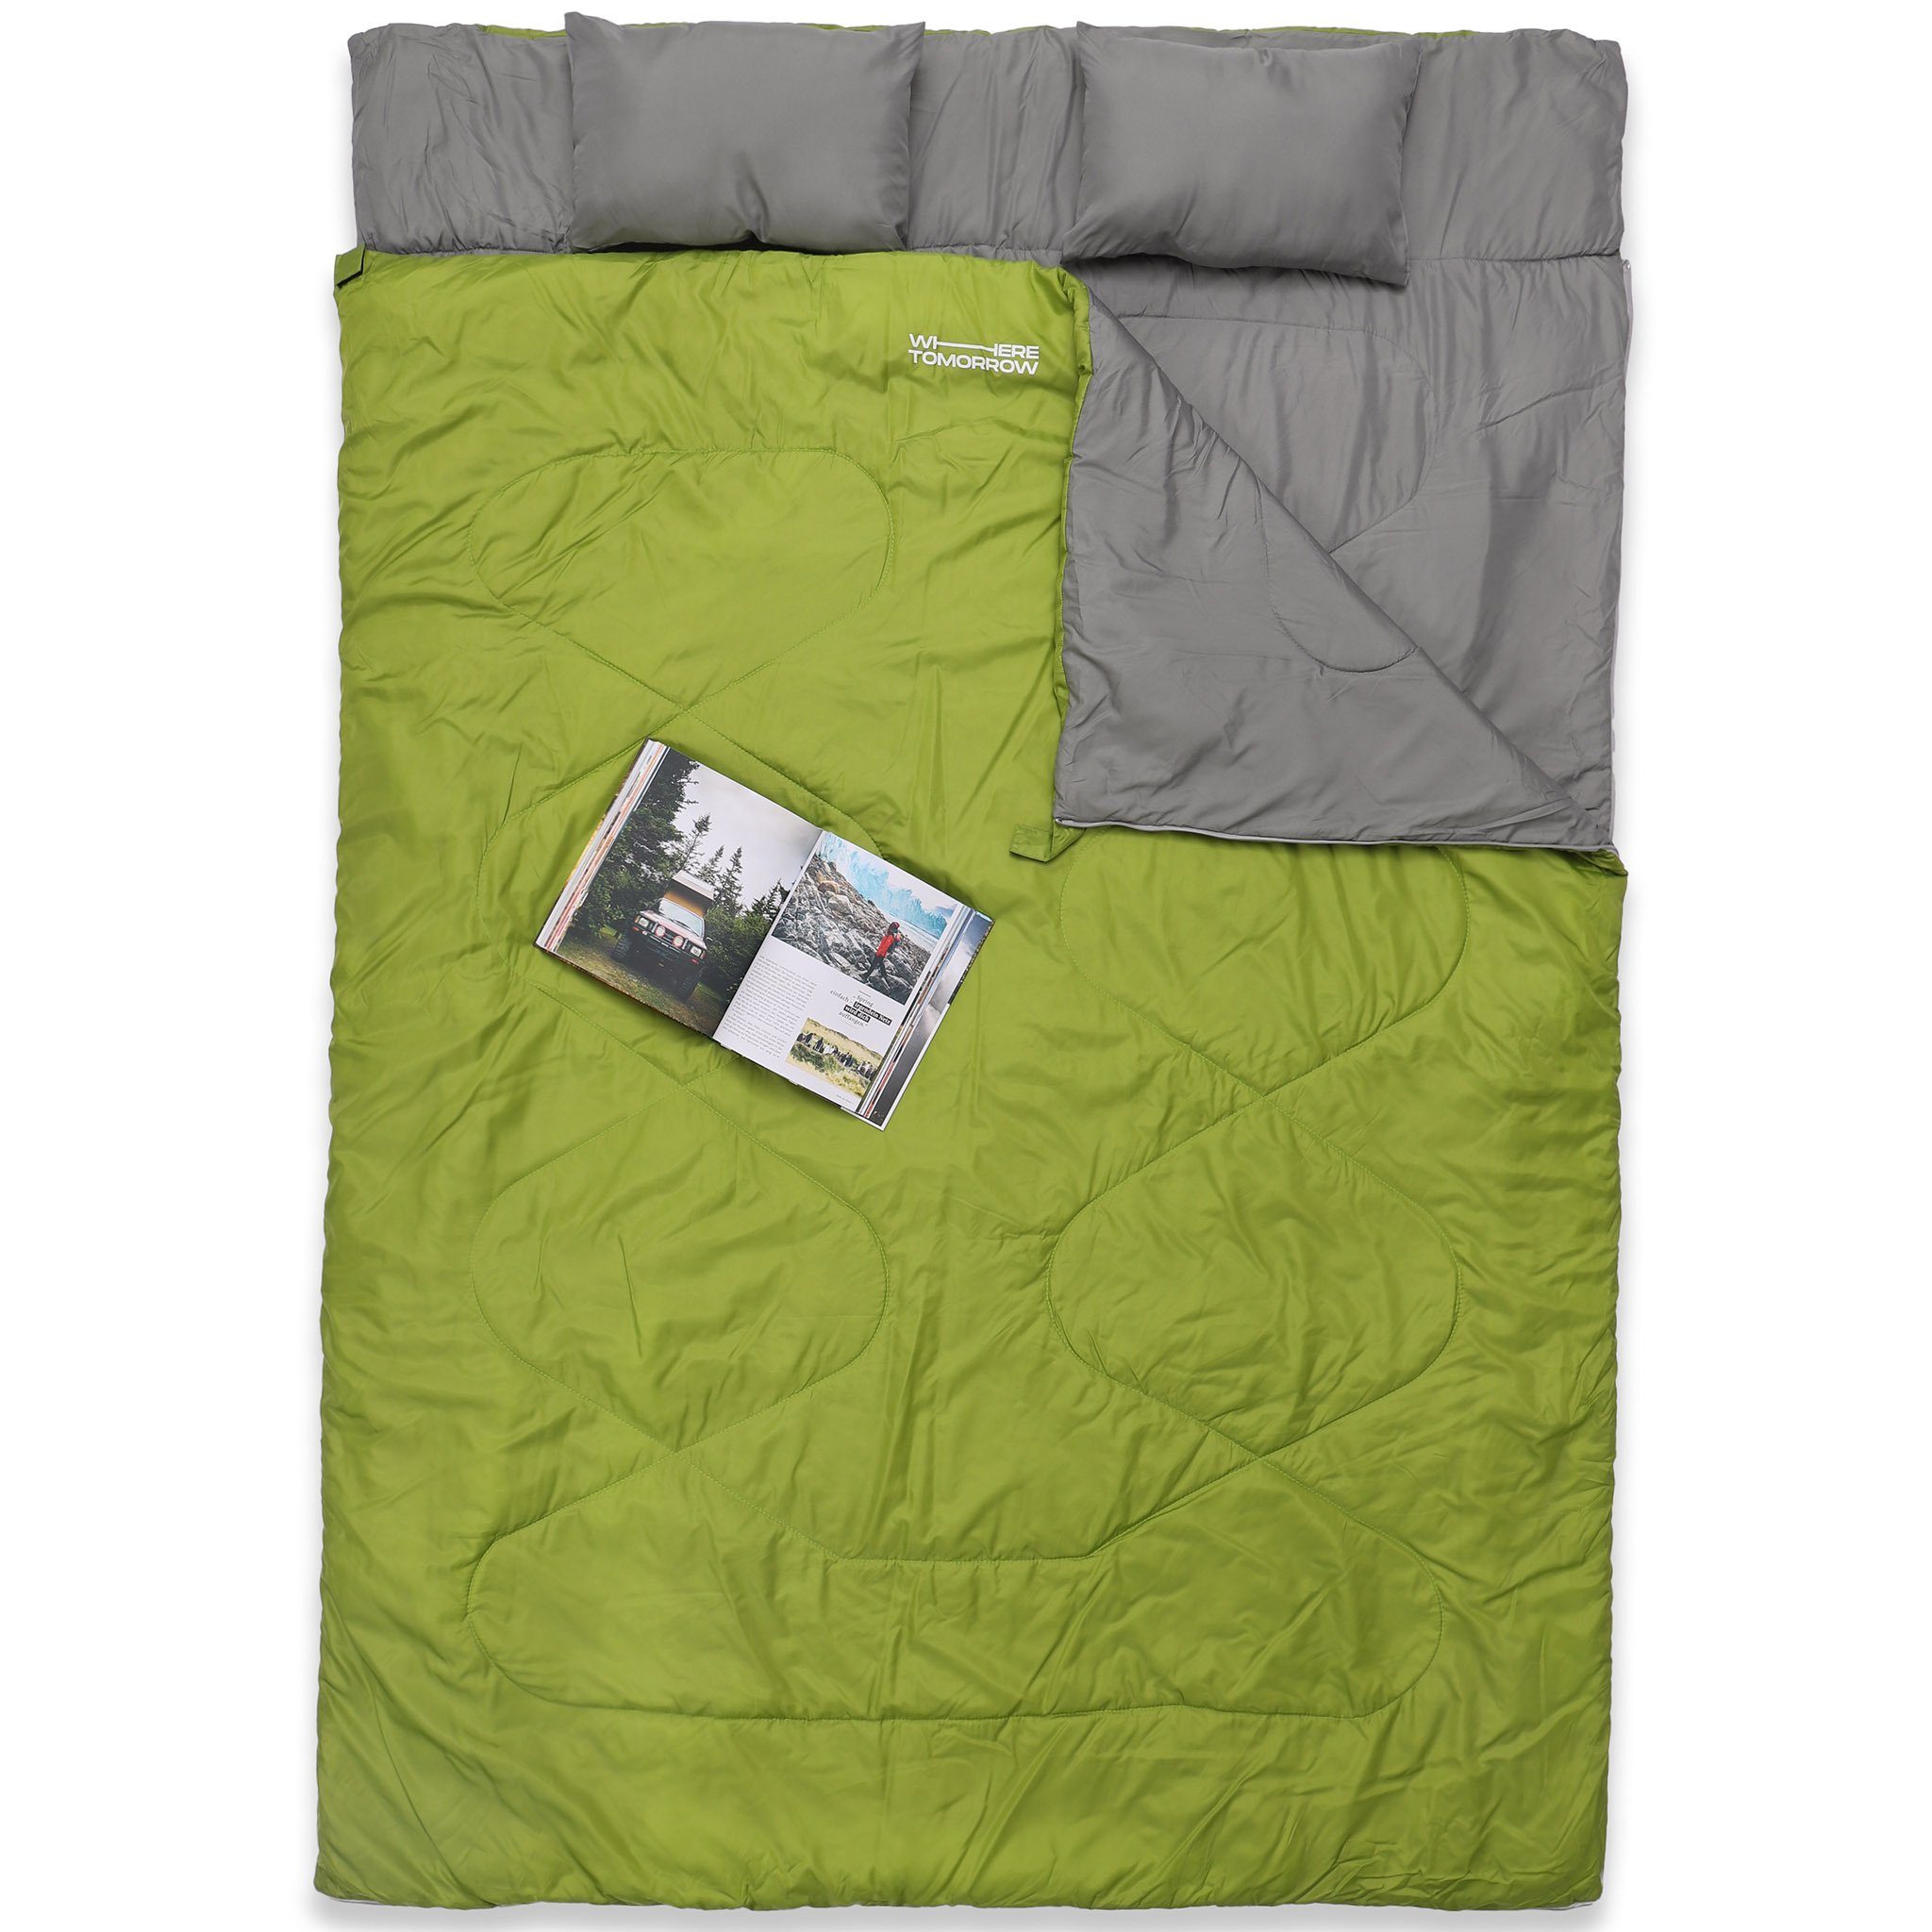 Lumaland Doppelschlafsack 2-Personen Schlafsack groß Kopfkissen, 190x30x150cm - Hüttenschlafsack wasserabweisend, atmungsaktiv Dunkelgrün